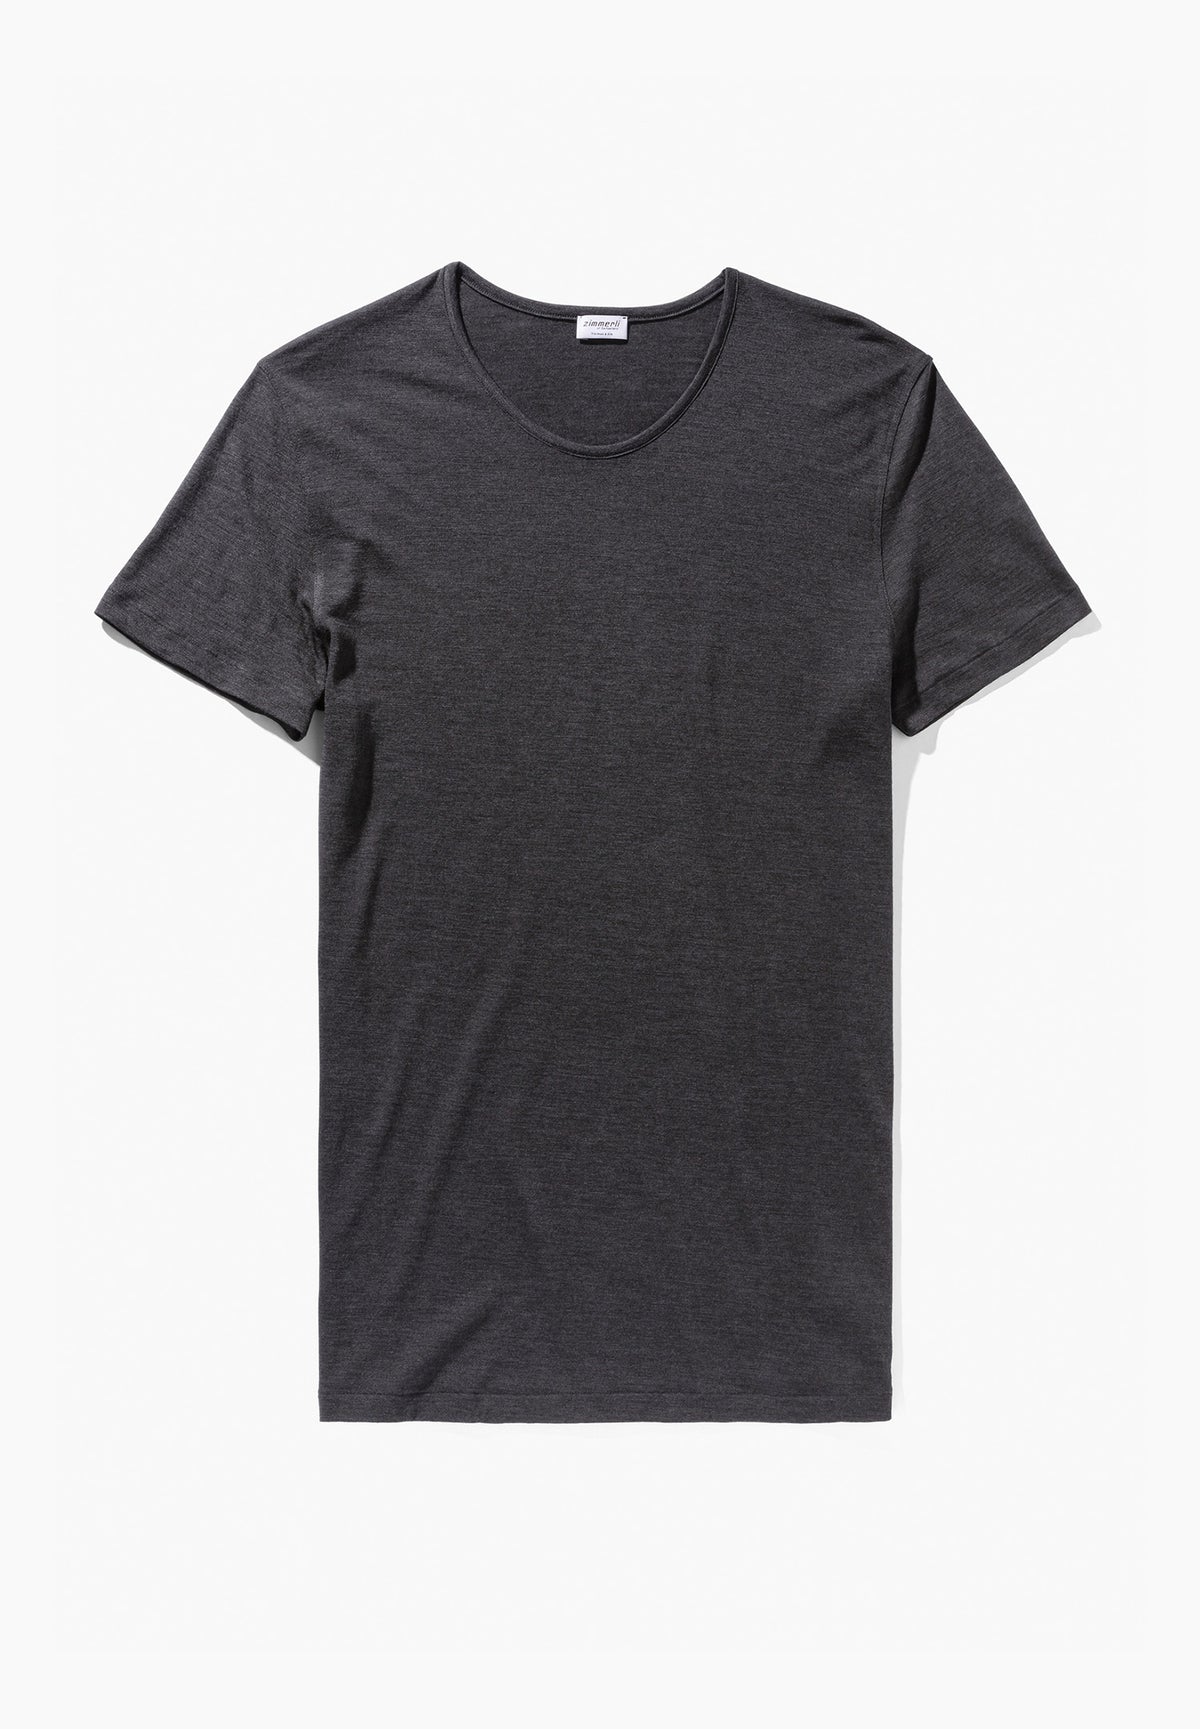 Wool &amp; Silk | T-Shirt kurzarm - charcoal